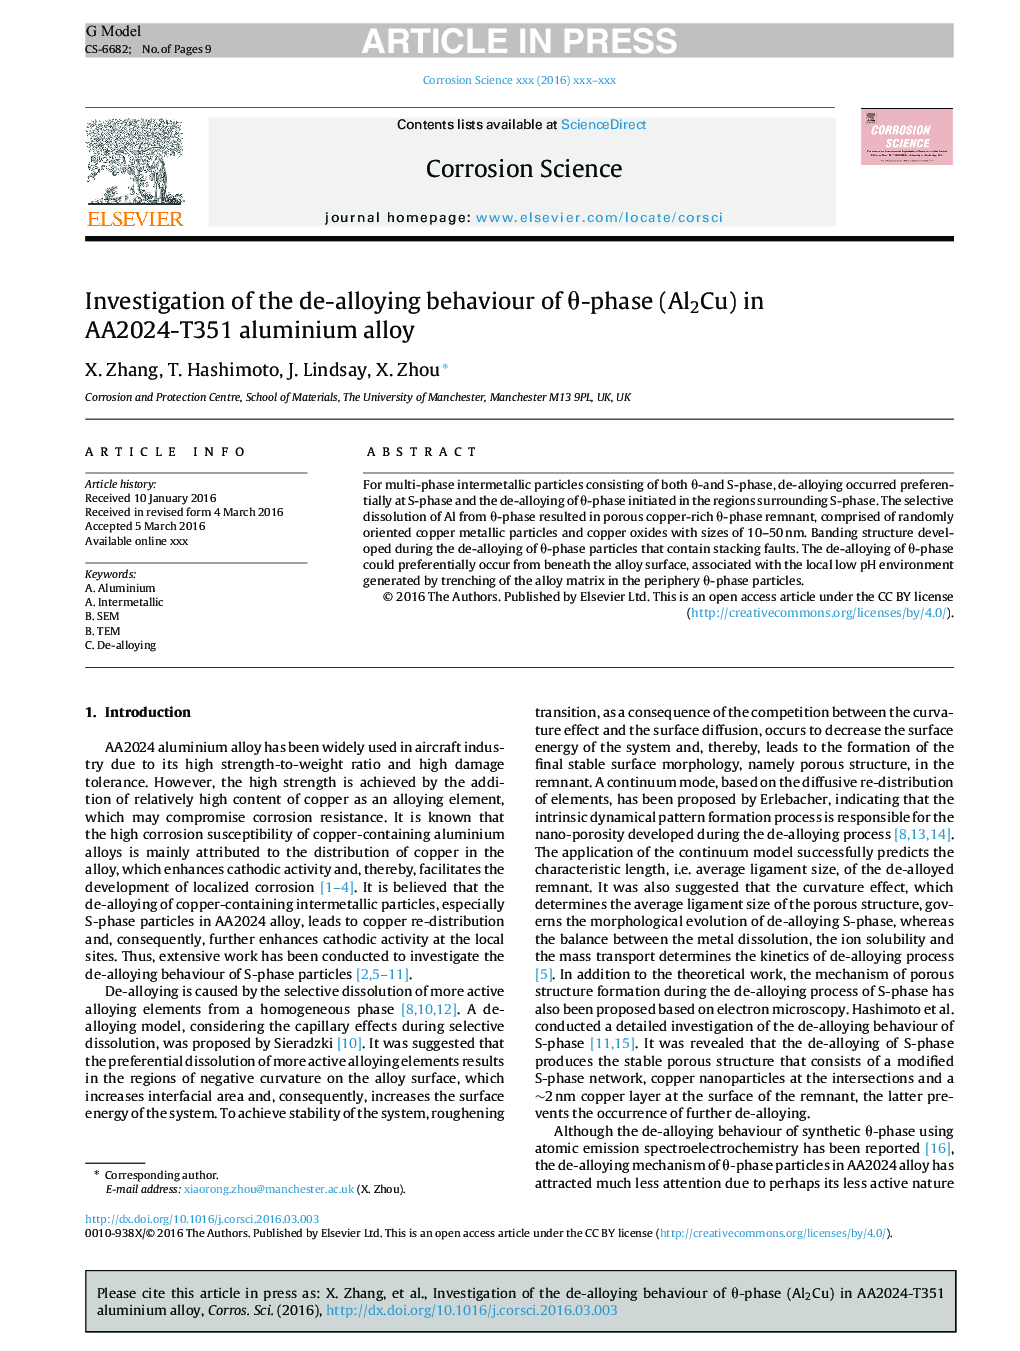 Investigation of the de-alloying behaviour of Î¸-phase (Al2Cu) in AA2024-T351 aluminium alloy